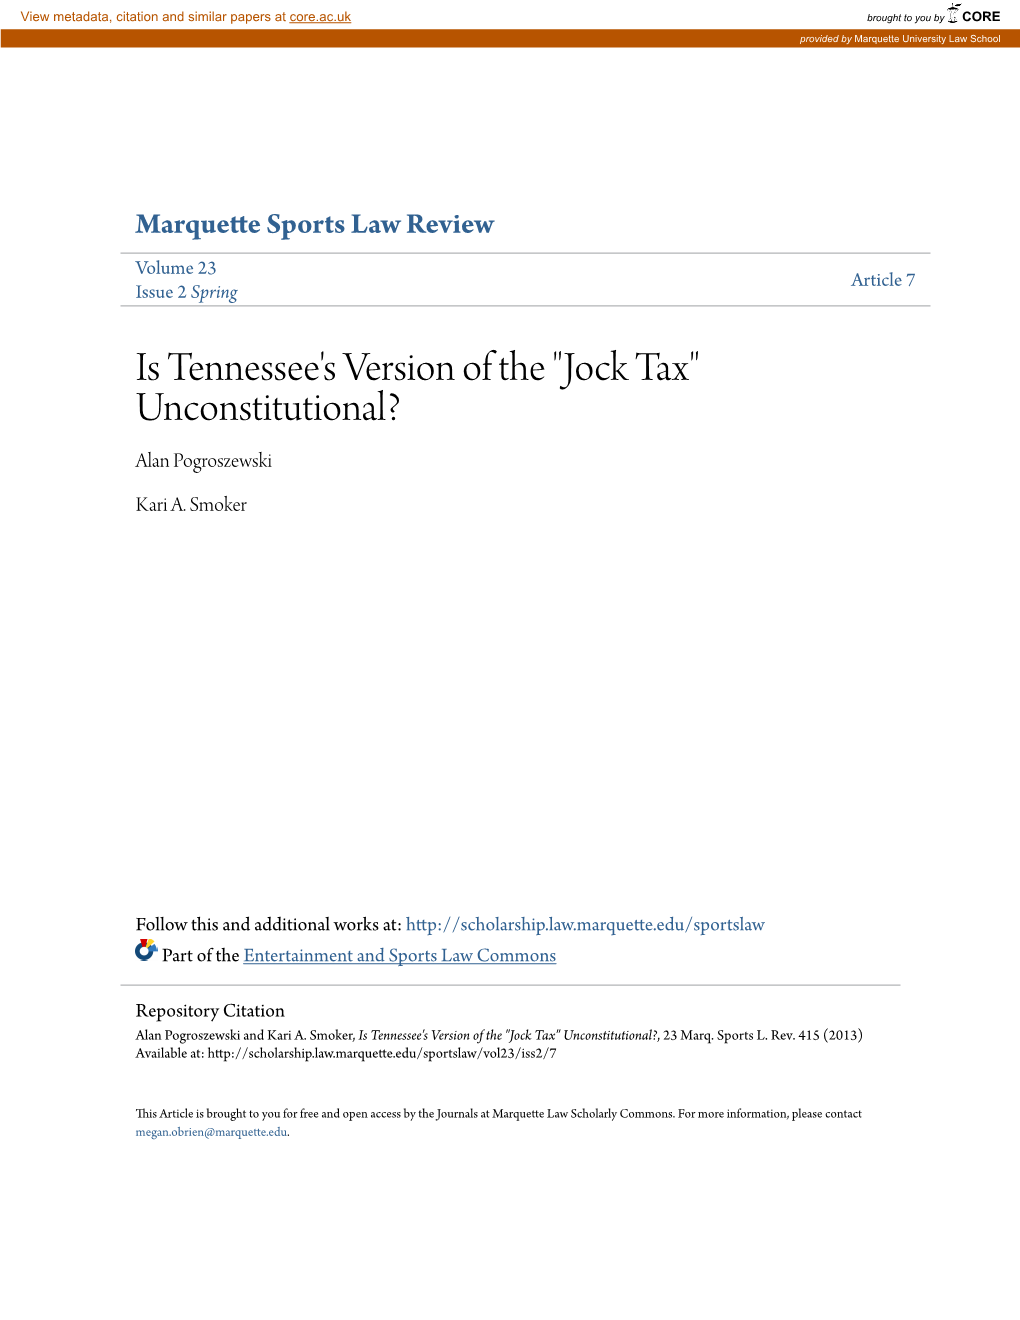 Is Tennessee's Version of the "Jock Tax" Unconstitutional? Alan Pogroszewski